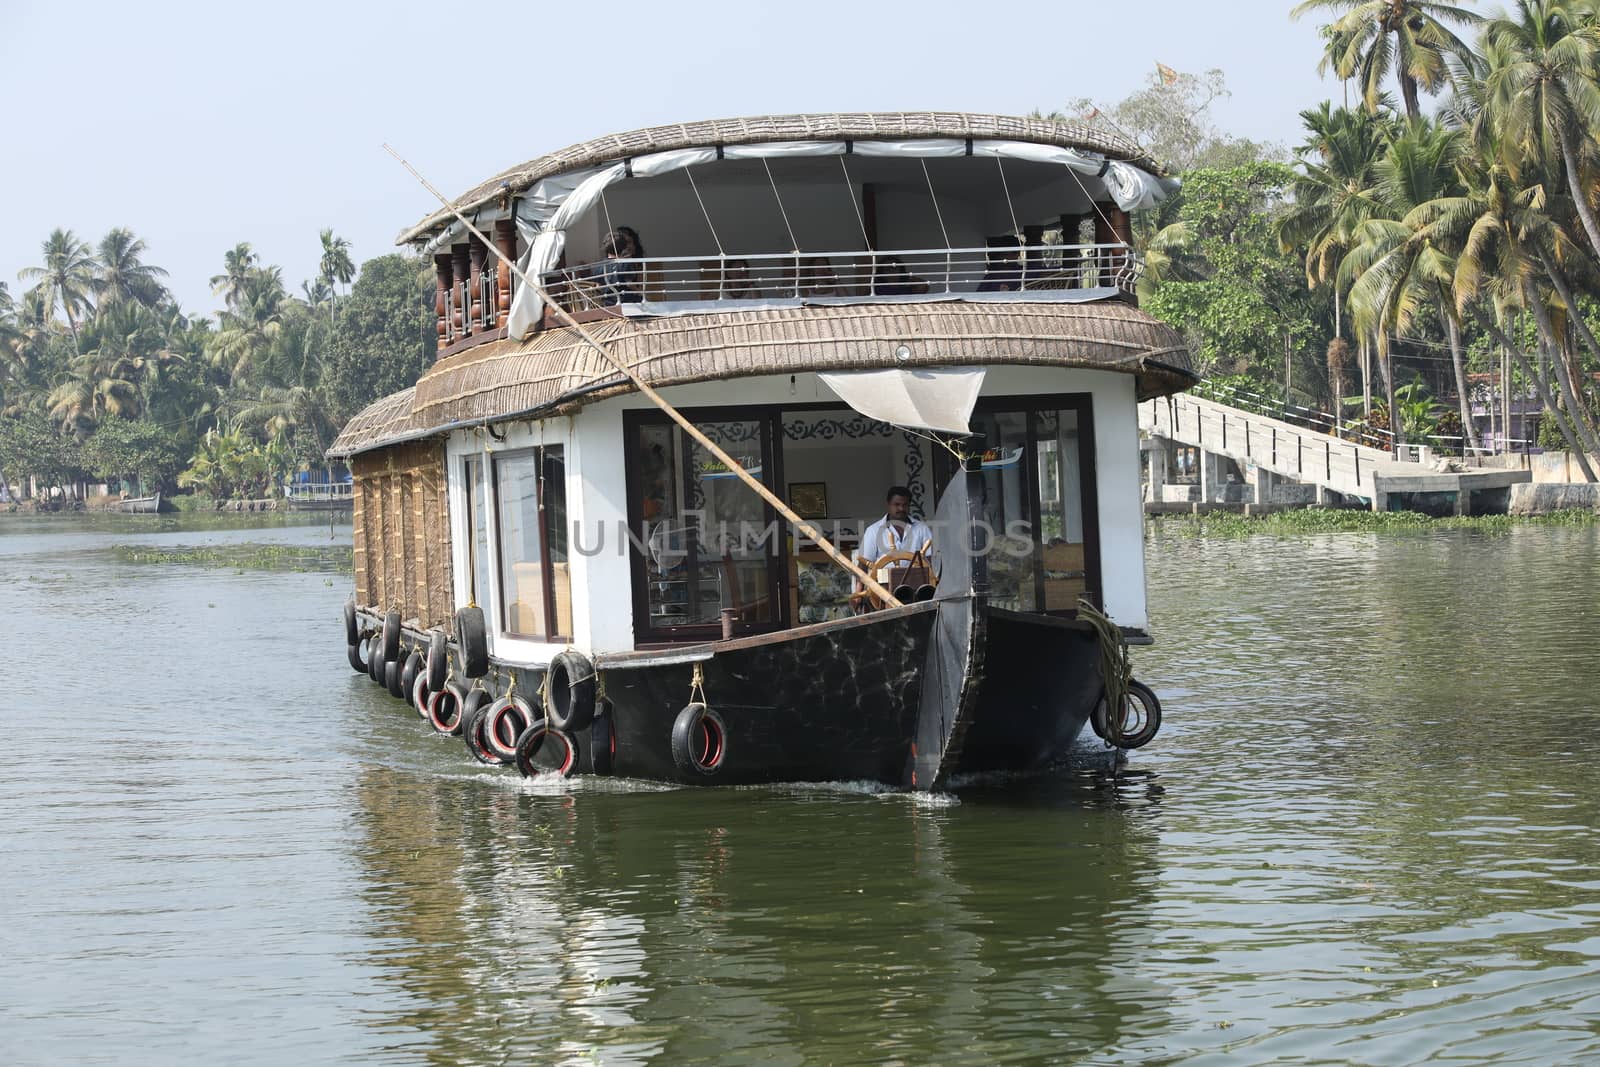 Tourist's Boat Kerala India